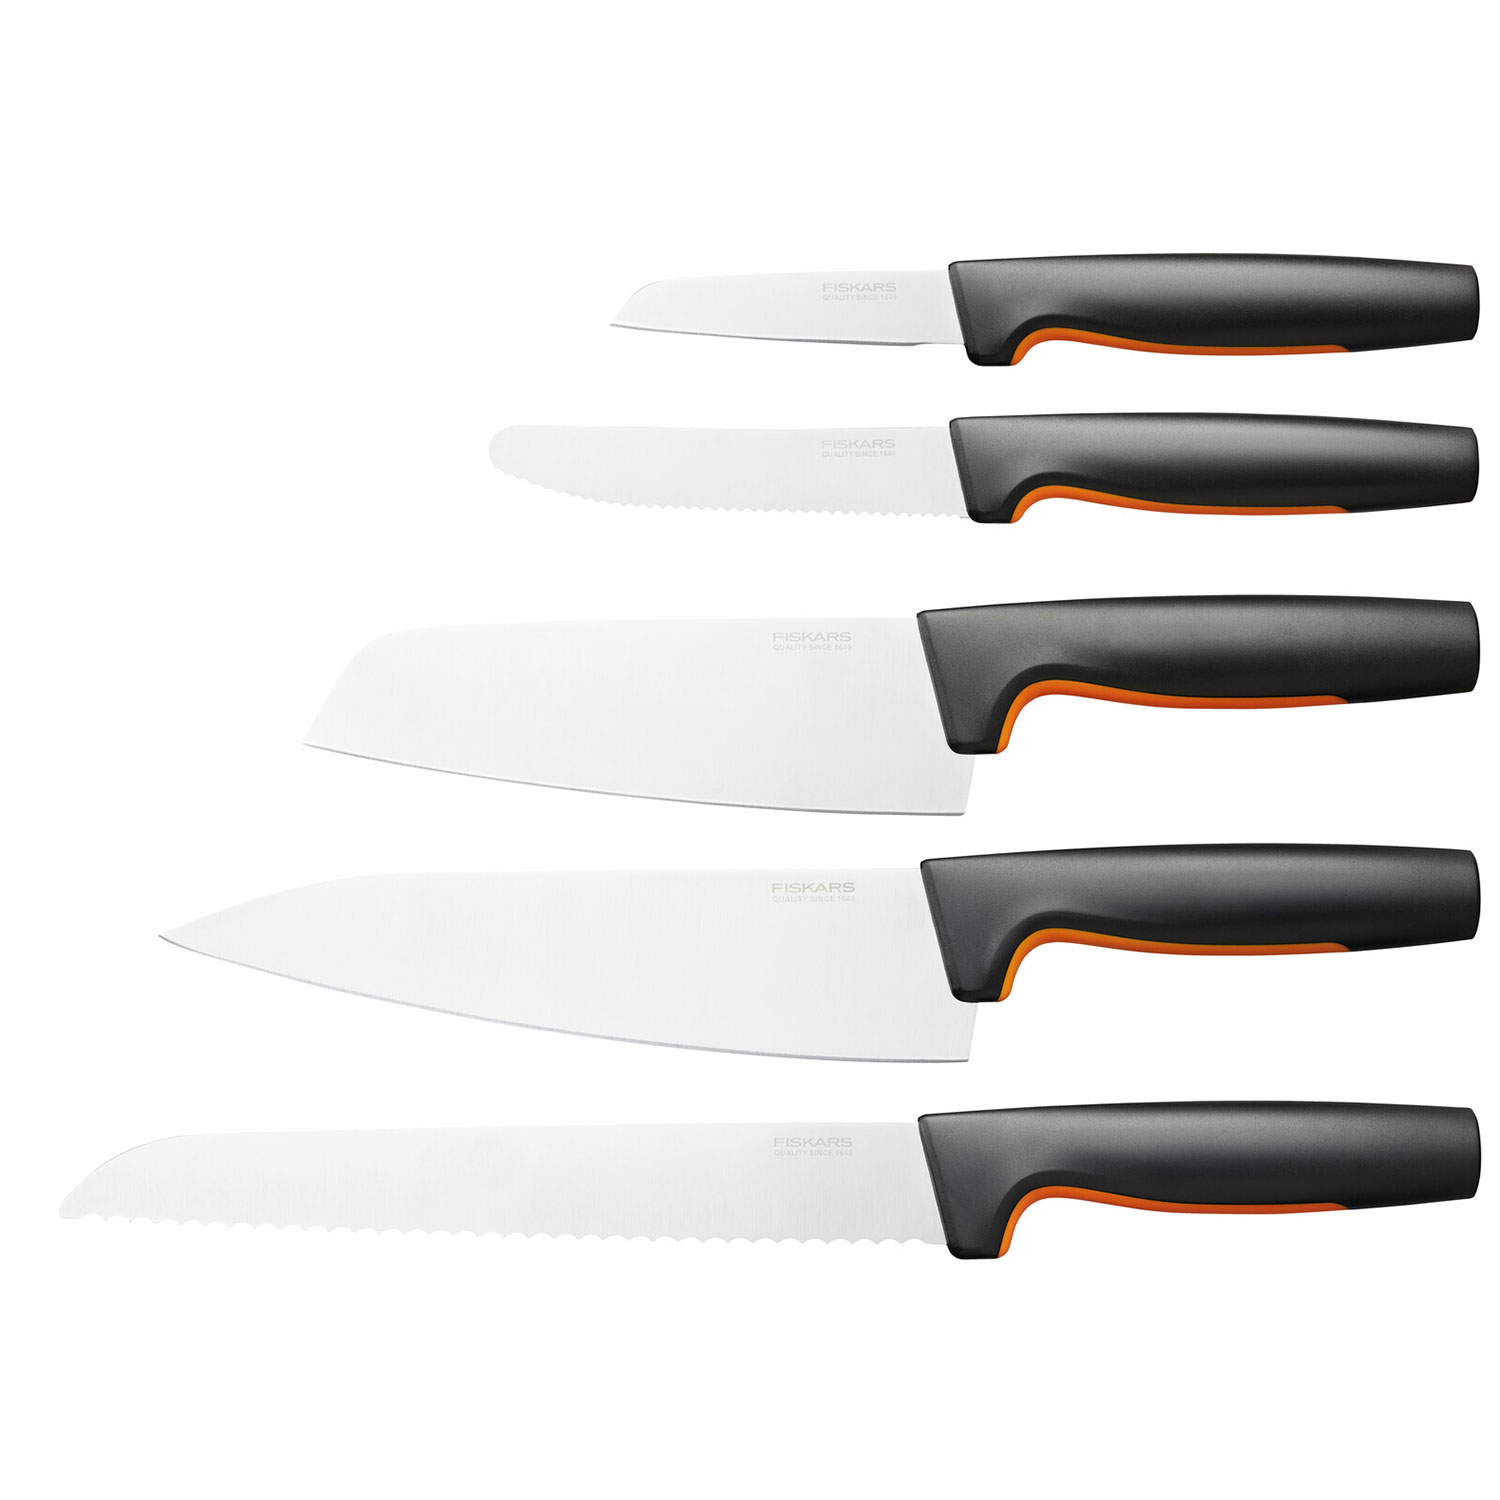 https://api-prod.royaldesign.se/api/products/image/2/fiskars-functional-form-knife-set-5-pack-0